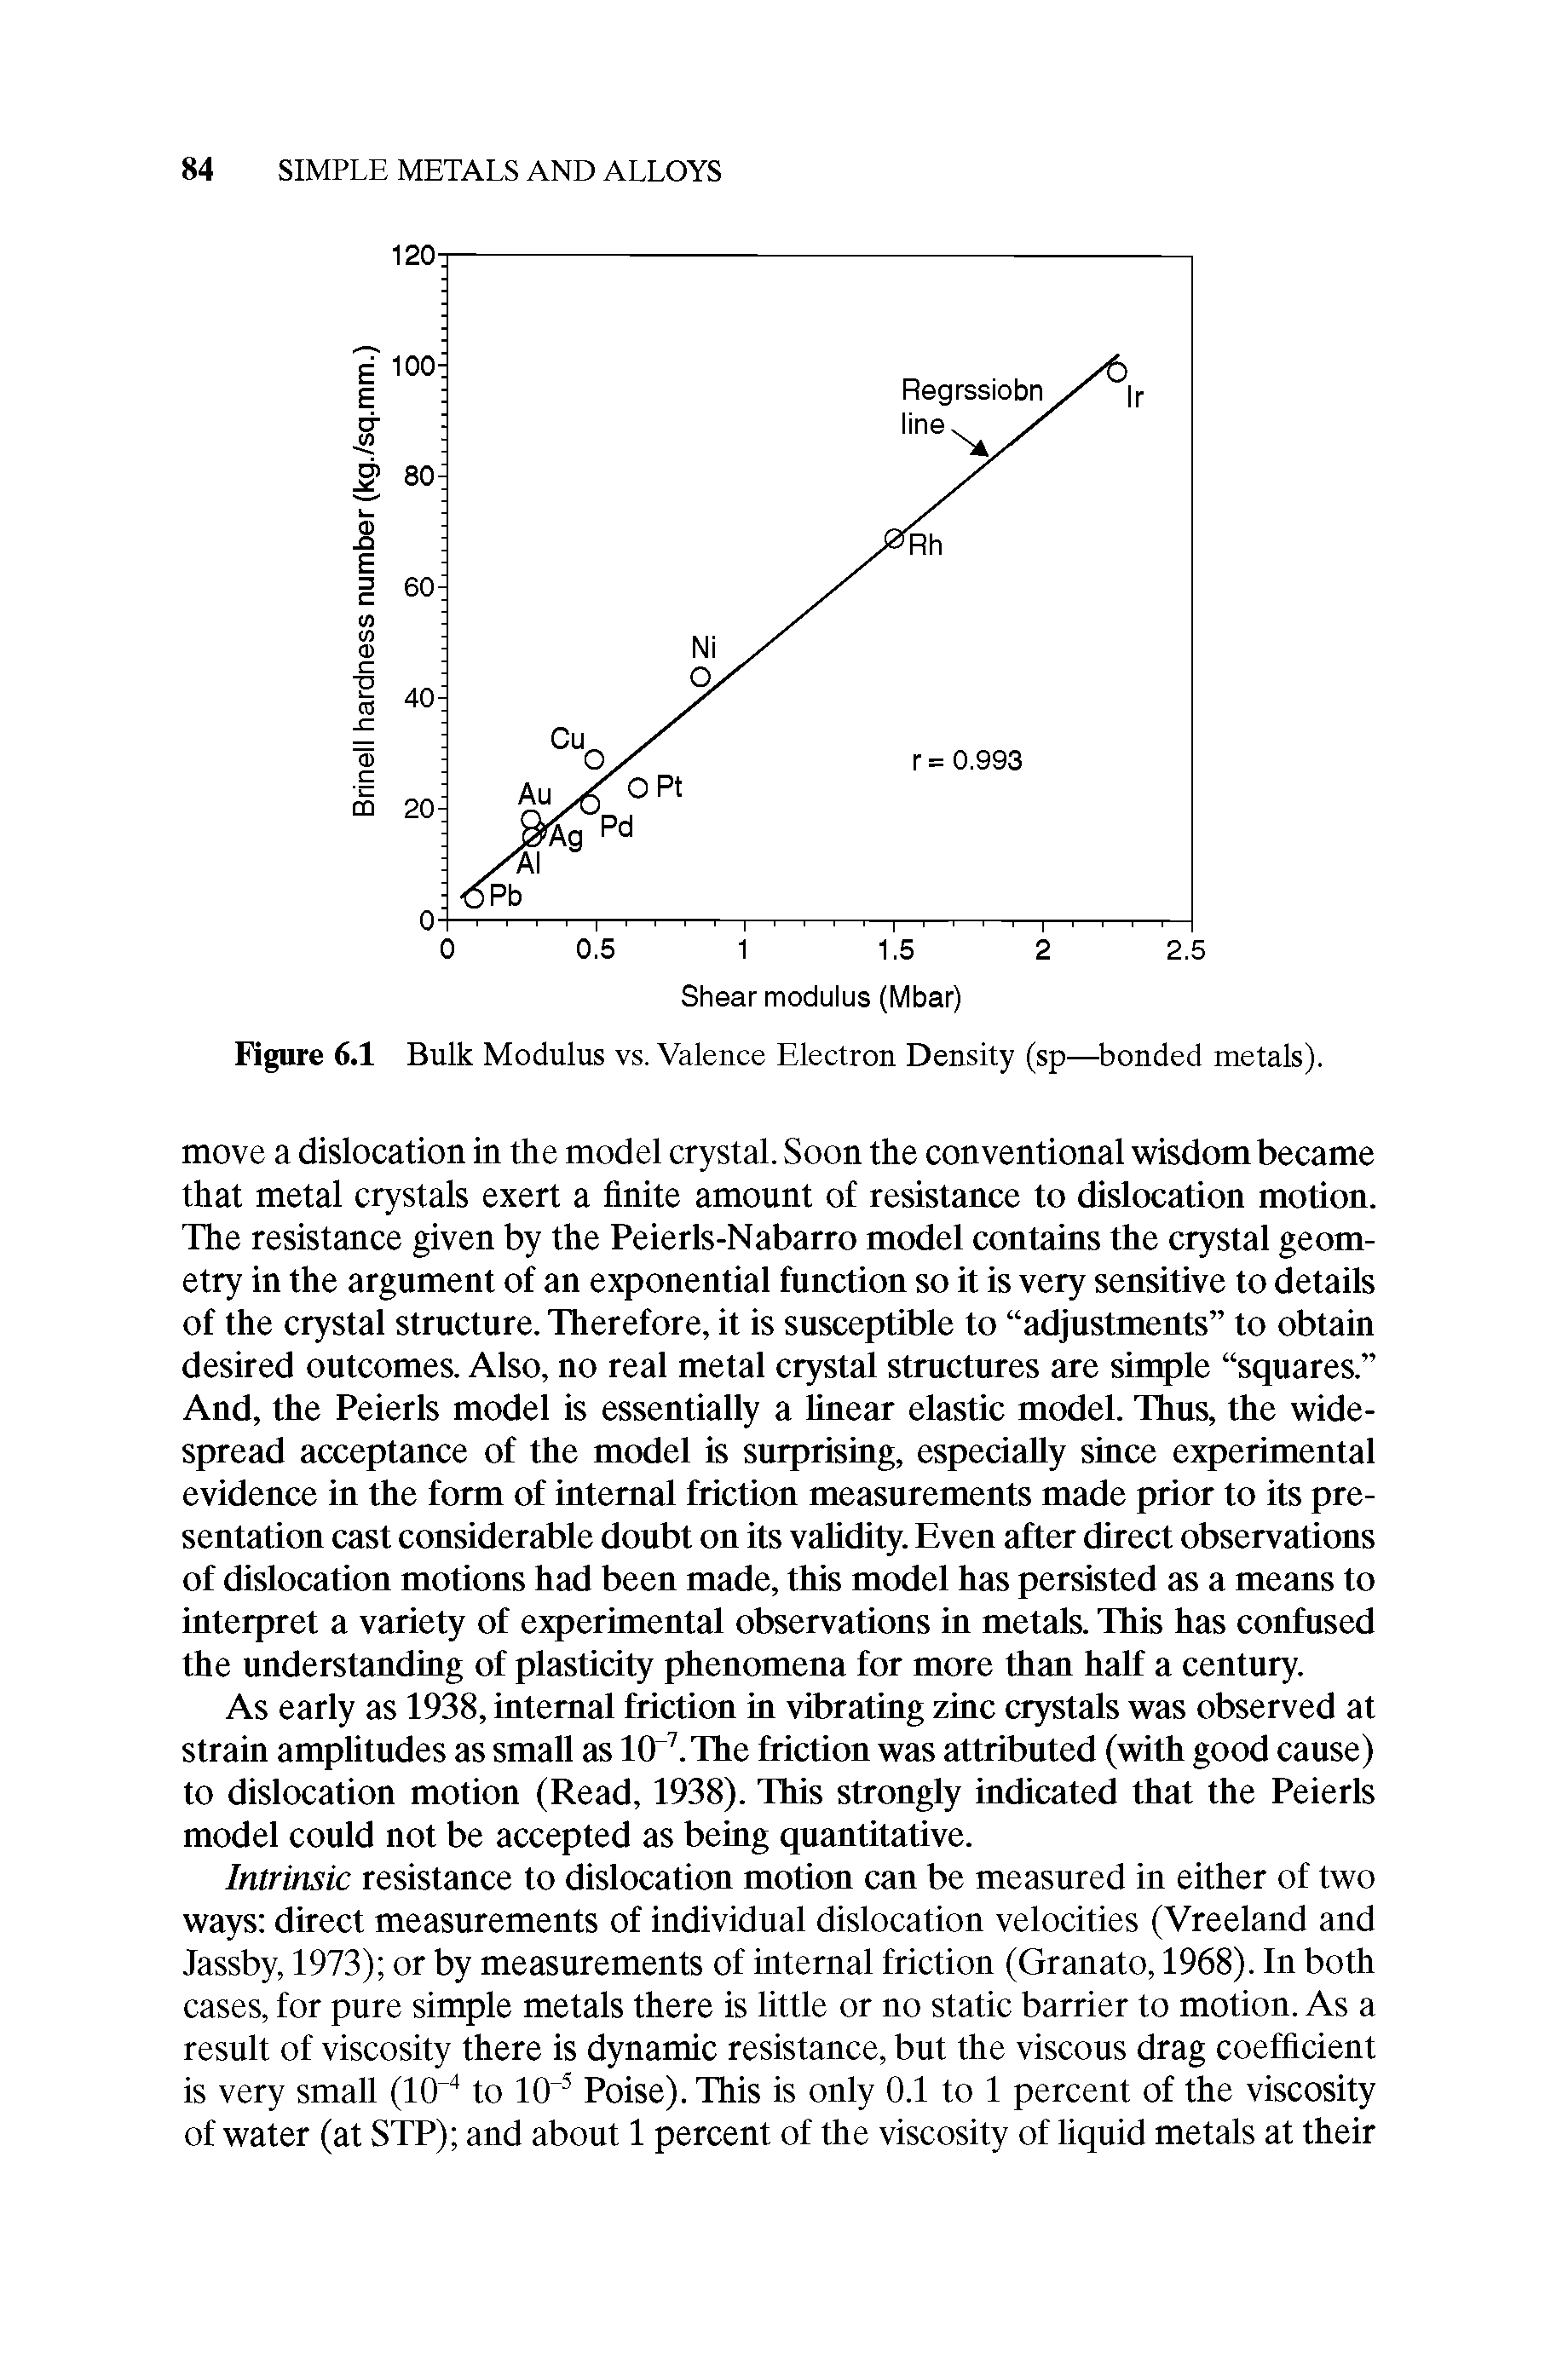 Figure 6.1 Bulk Modulus vs. Valence Electron Density (sp—bonded metals).